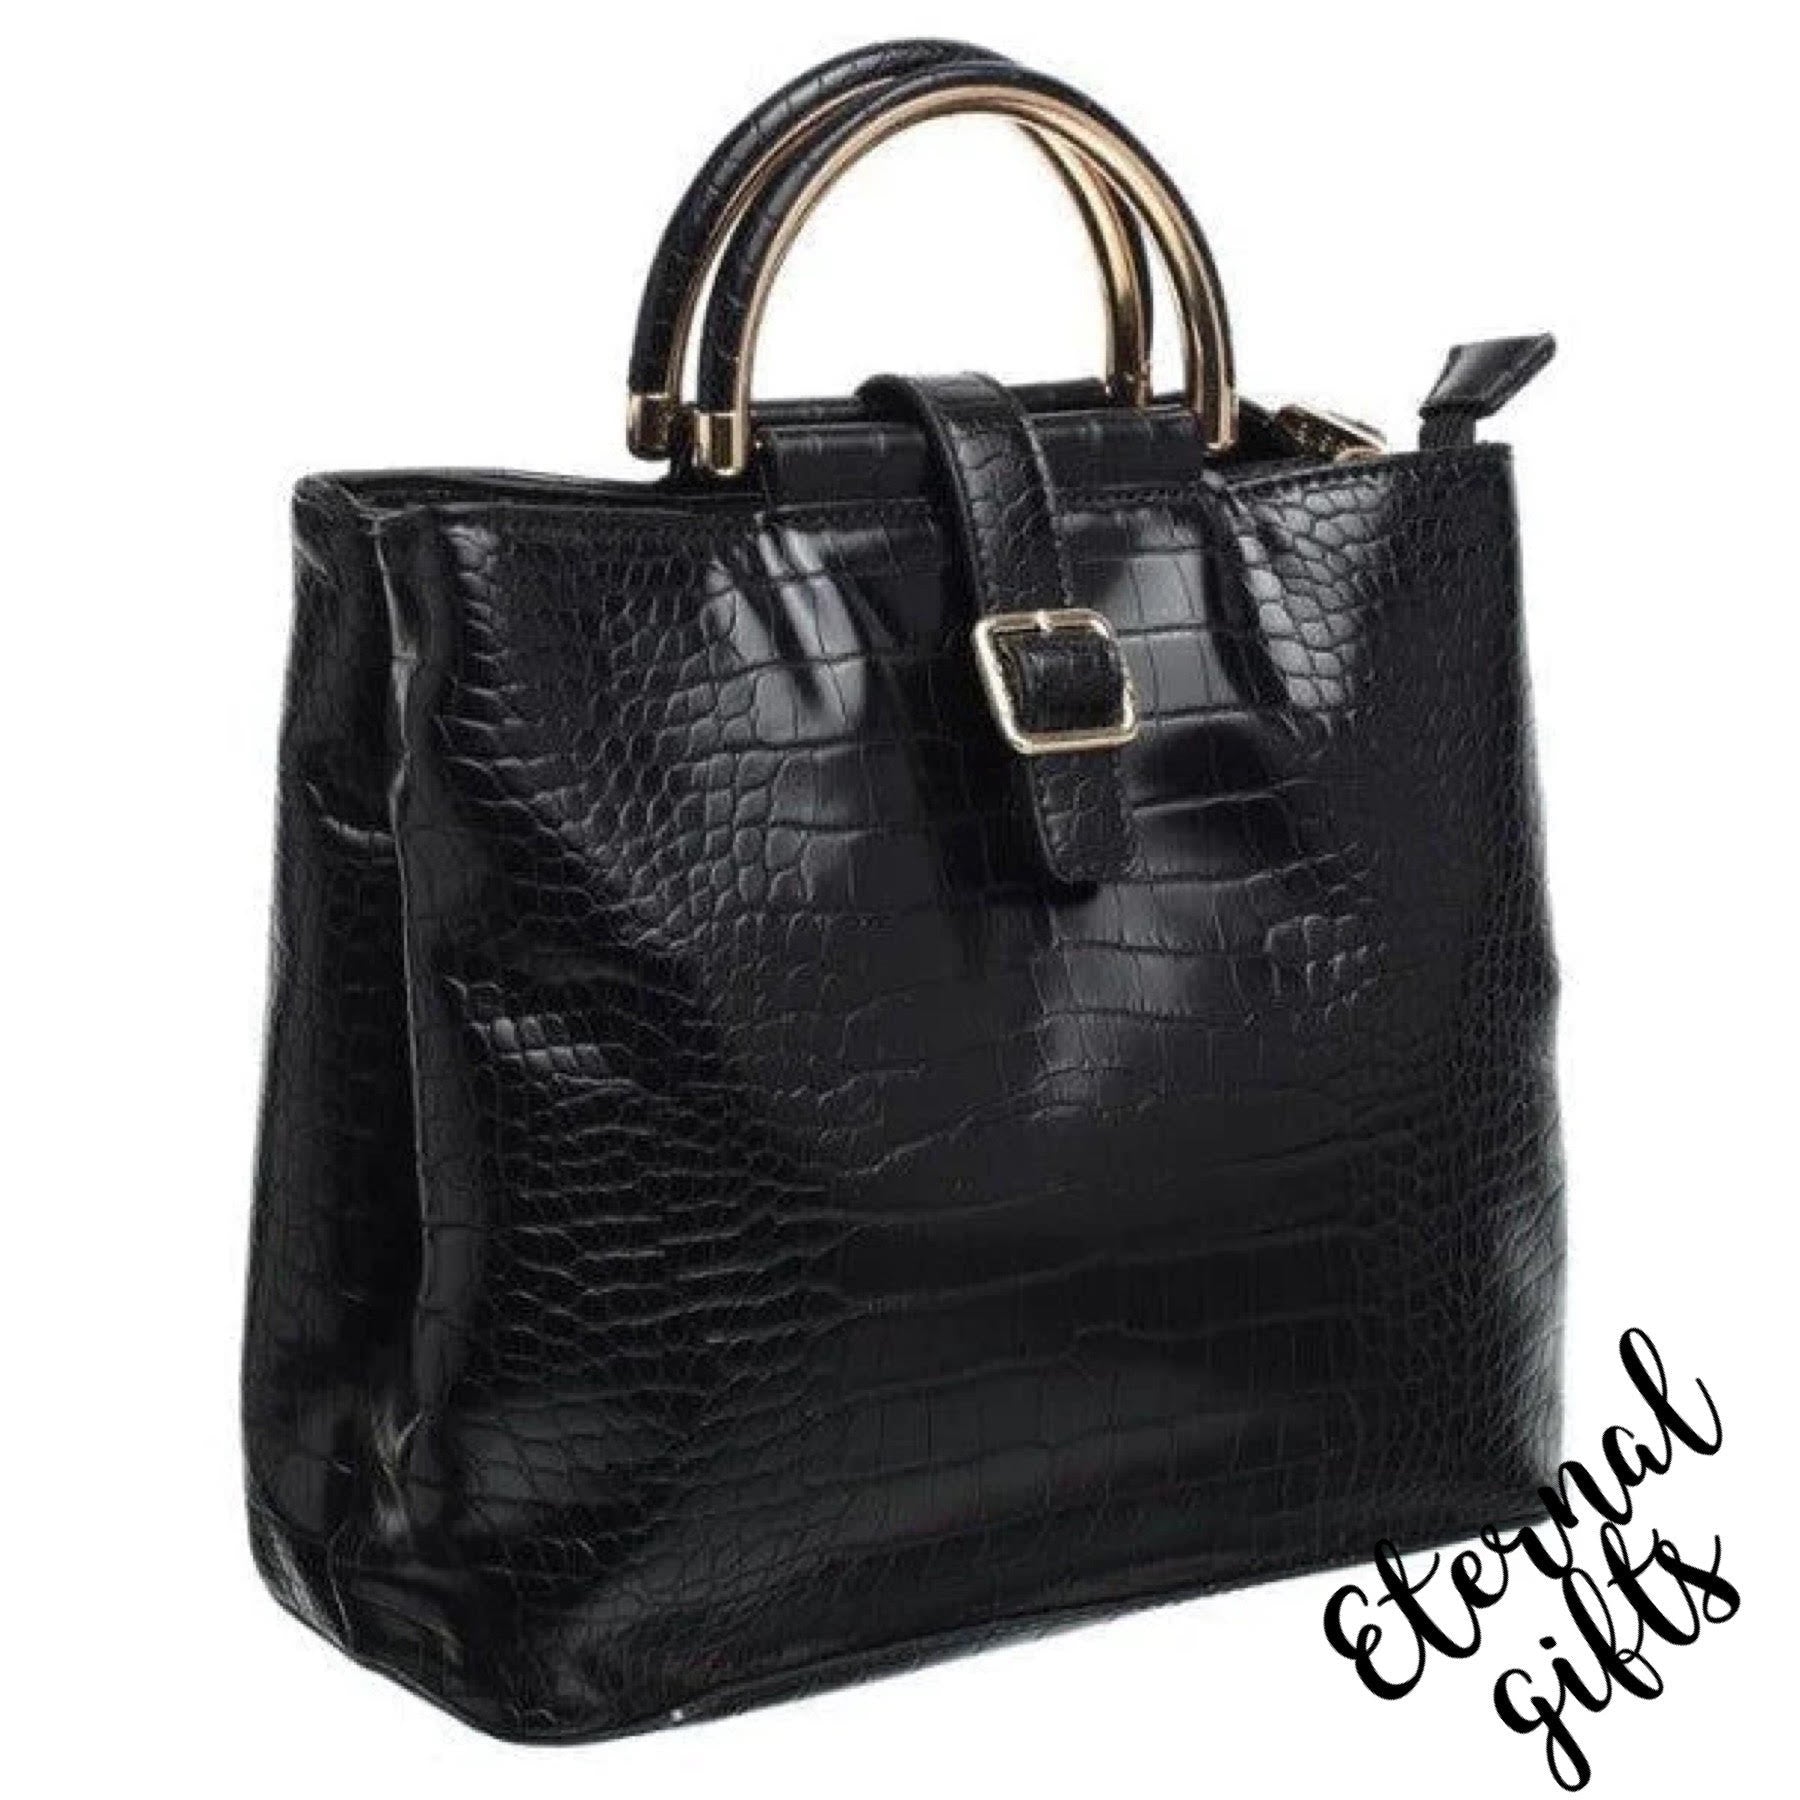 The Melanie Handbag in Black by Bessie